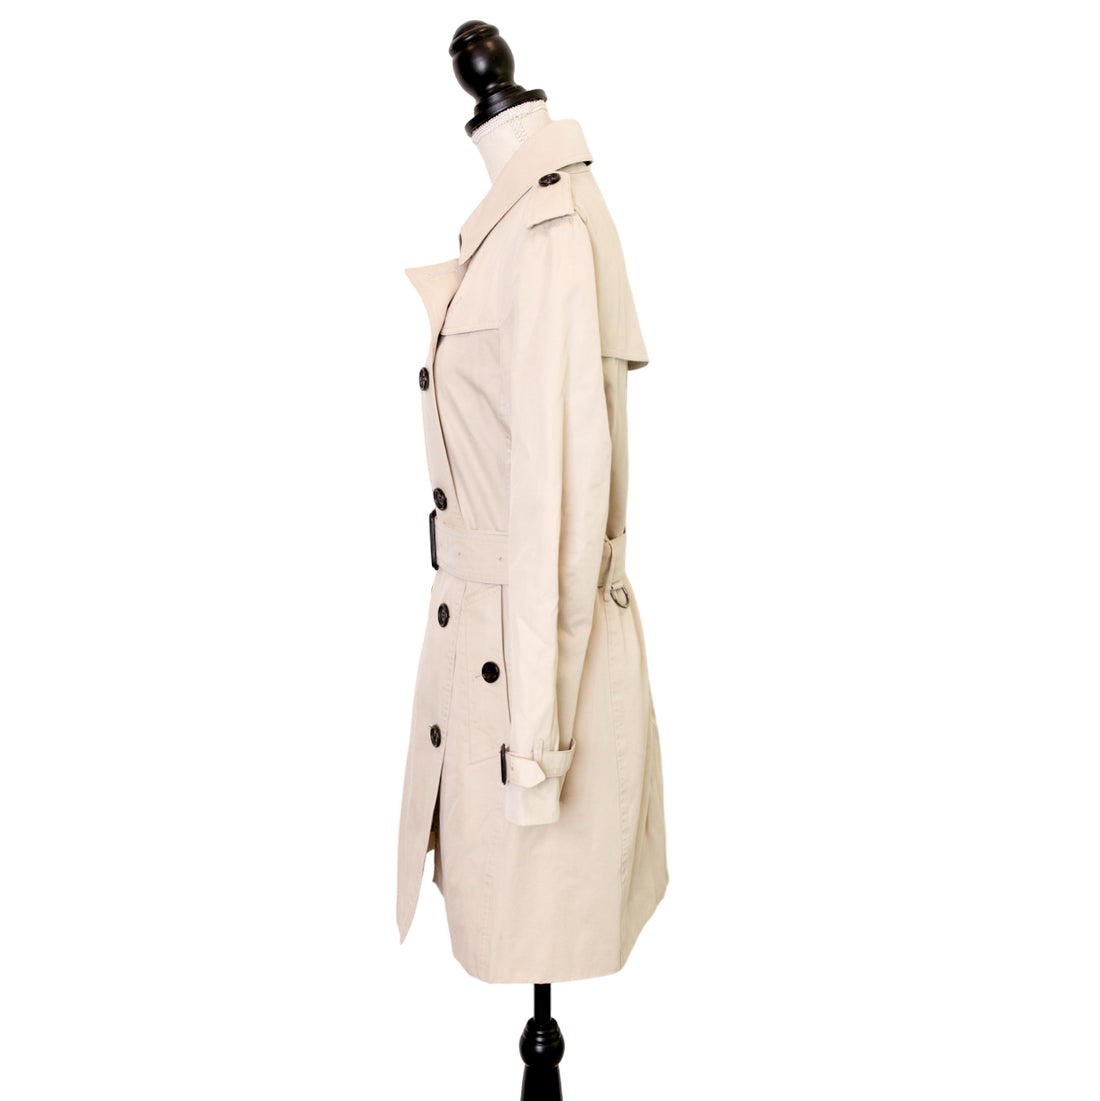 Burberry classic short trench coat